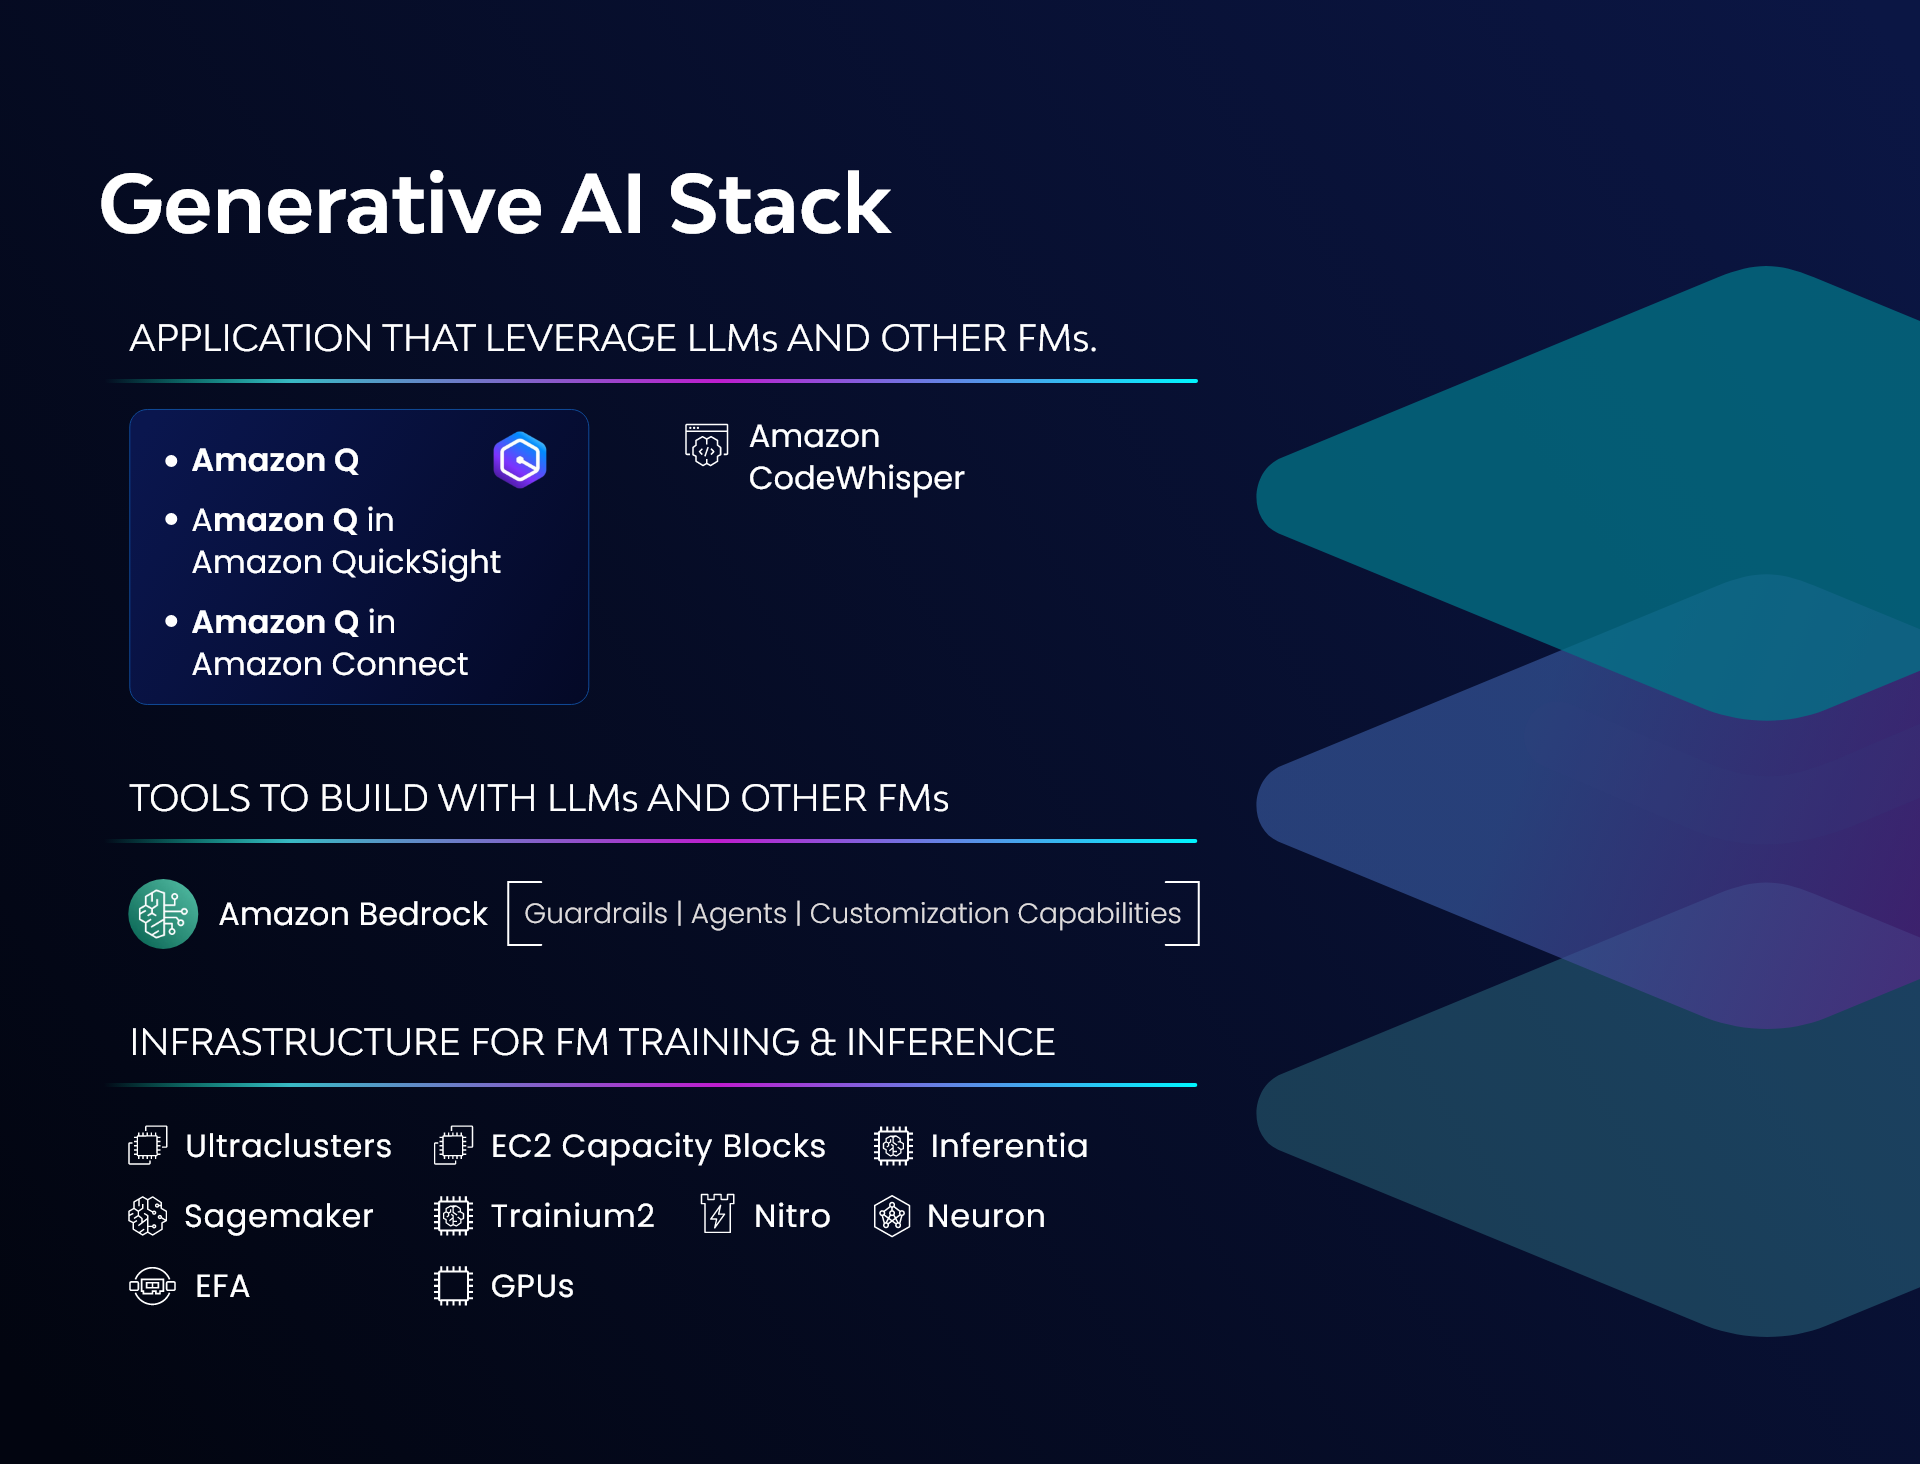 The Generative AI stack AWS